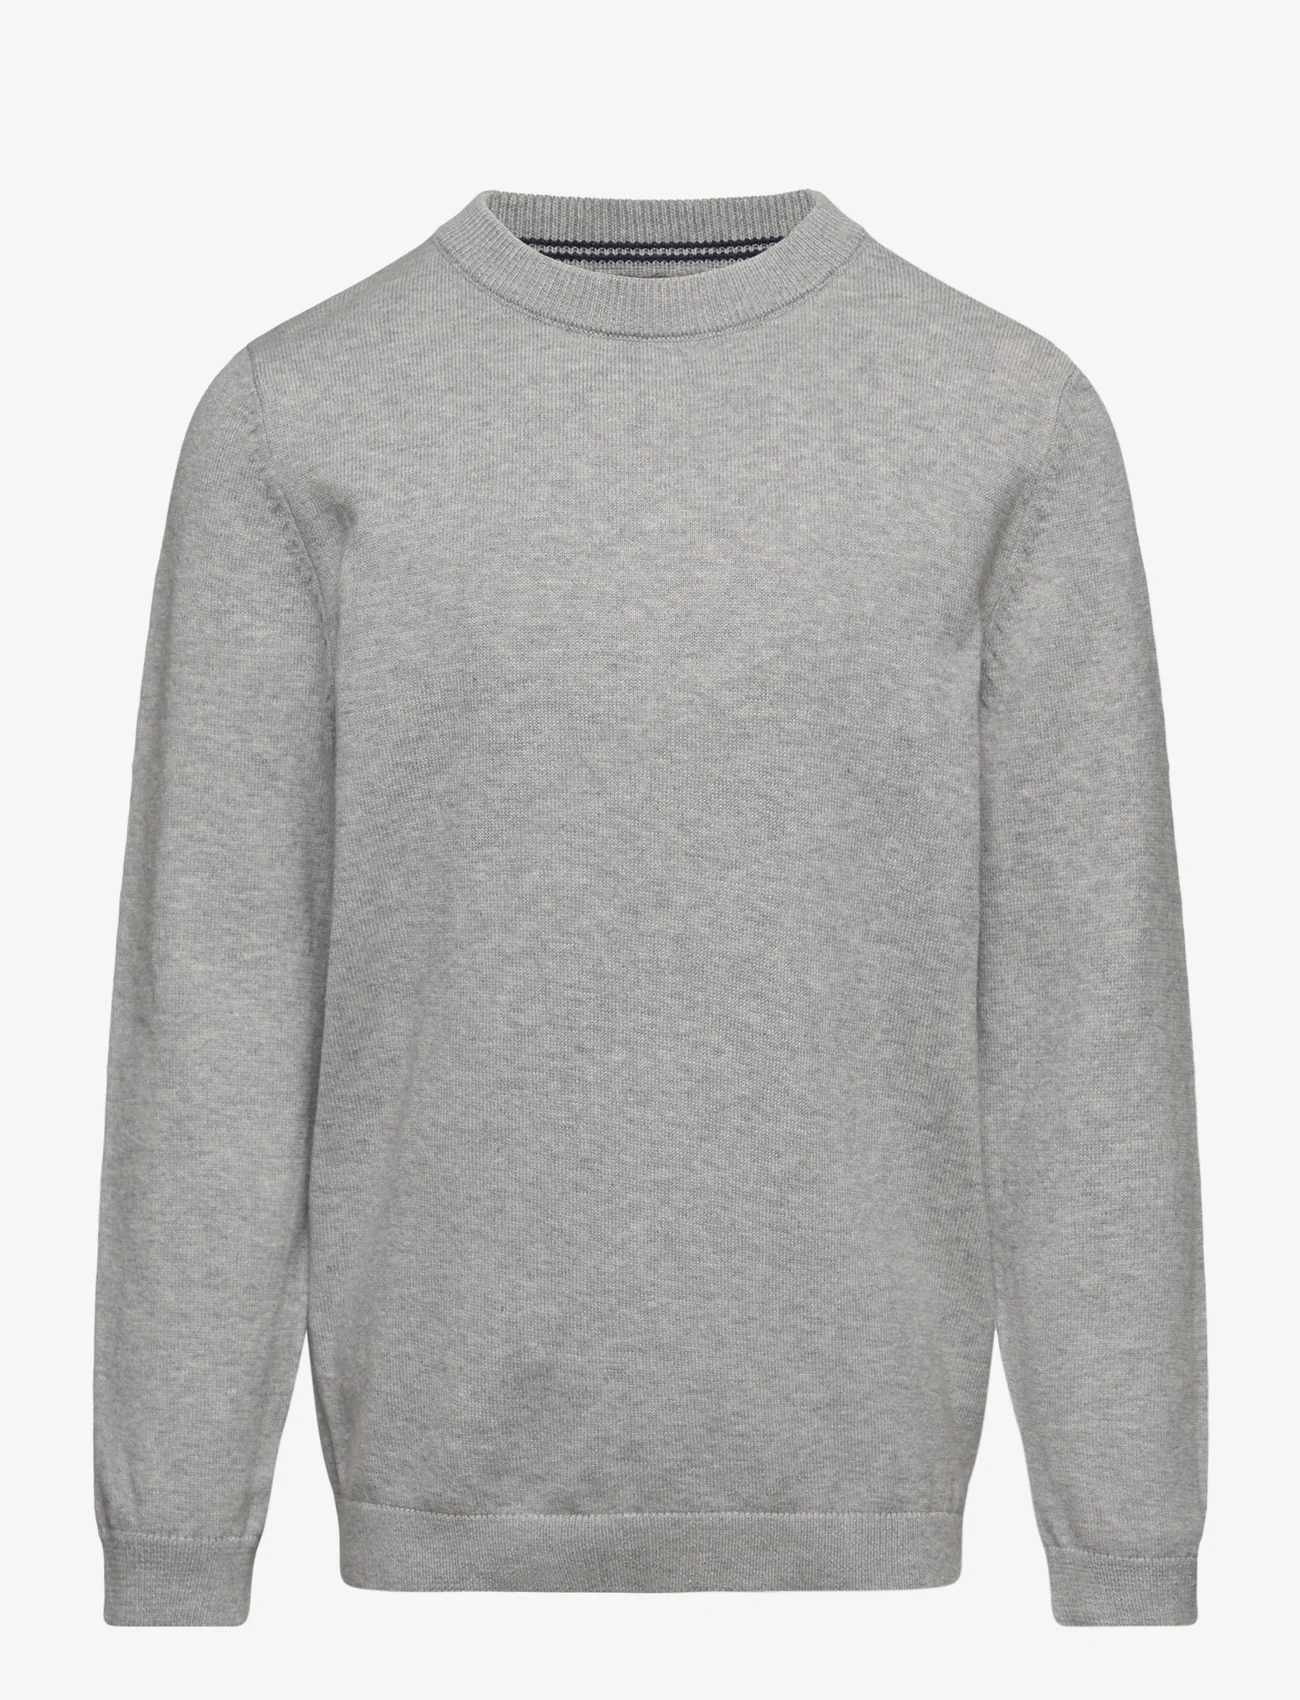 Mango - Knit cotton sweater - sweatshirts - medium grey - 0